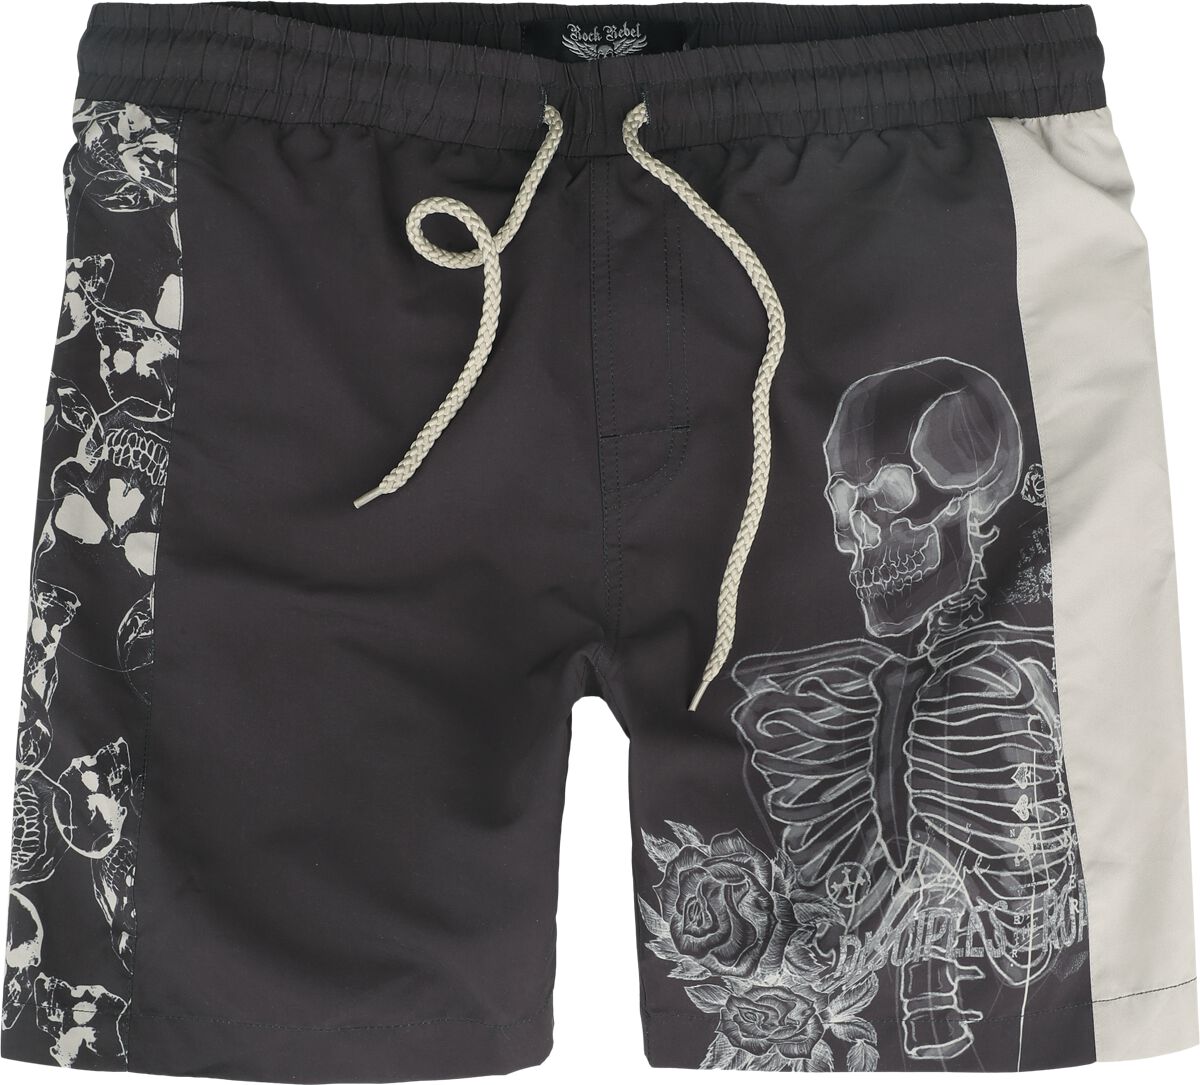 Rock Rebel by EMP Swim Shorts With Skeleton Print Badeshort dunkelgrau in L